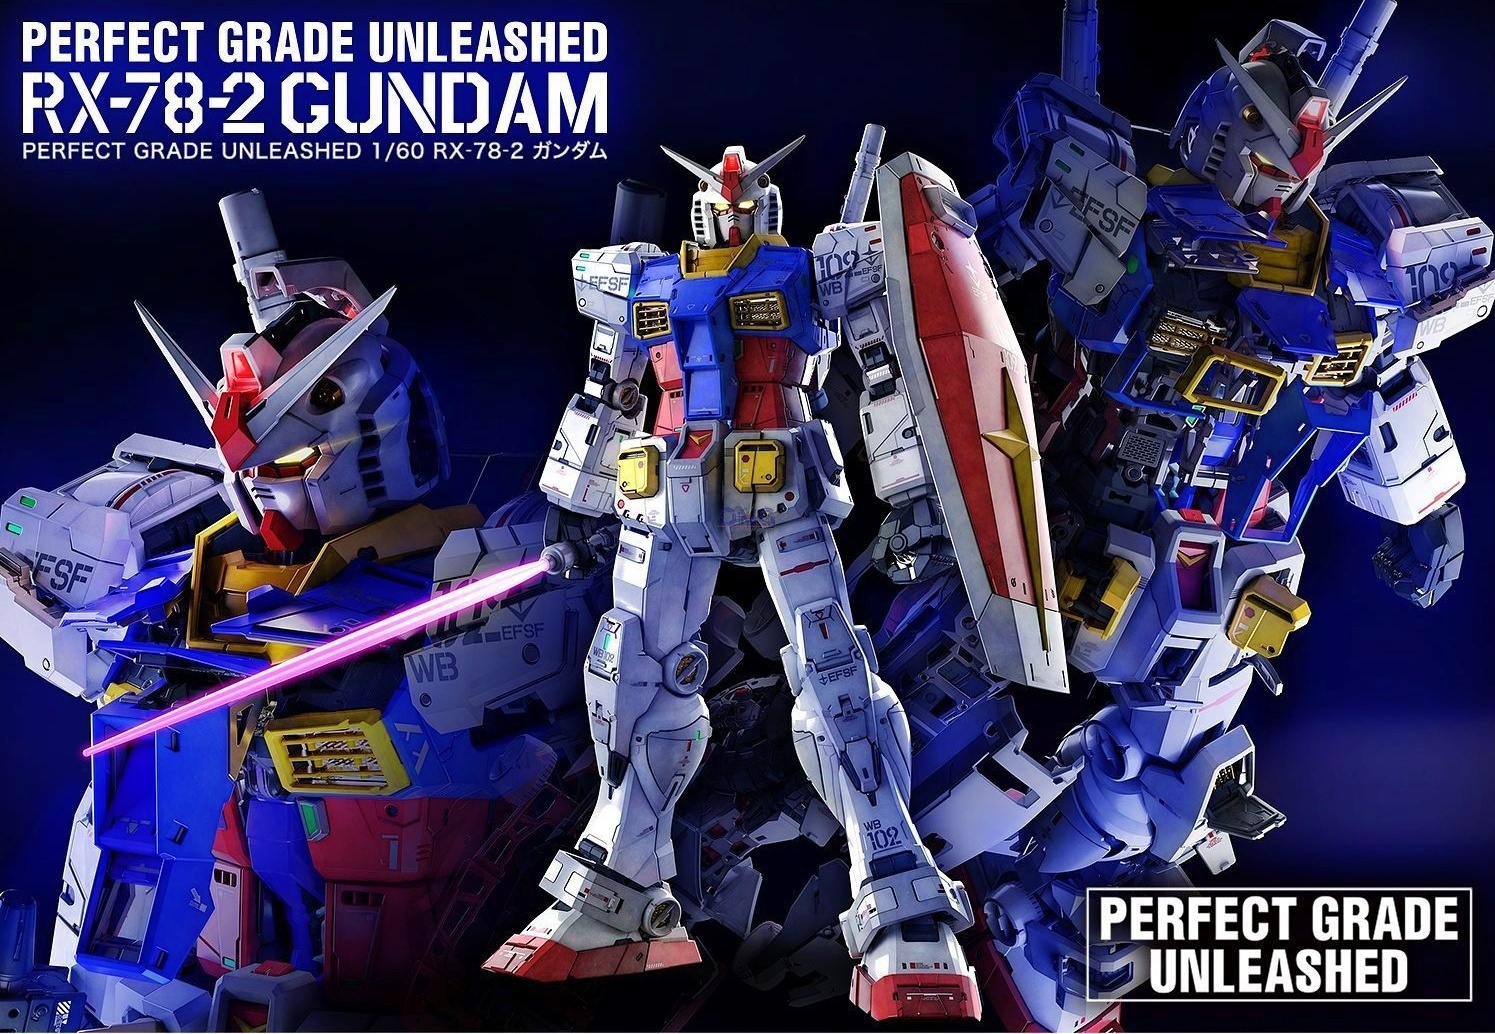 Bandai Pg 1 60 Unleashed Rx 78 2 Pg Rx 78 2 0 Available In Dec Mar 21 Omg Oh My Gundam Malaysia Online Hobby Store Gundam Modelling Kits Bandai Gunpla Store